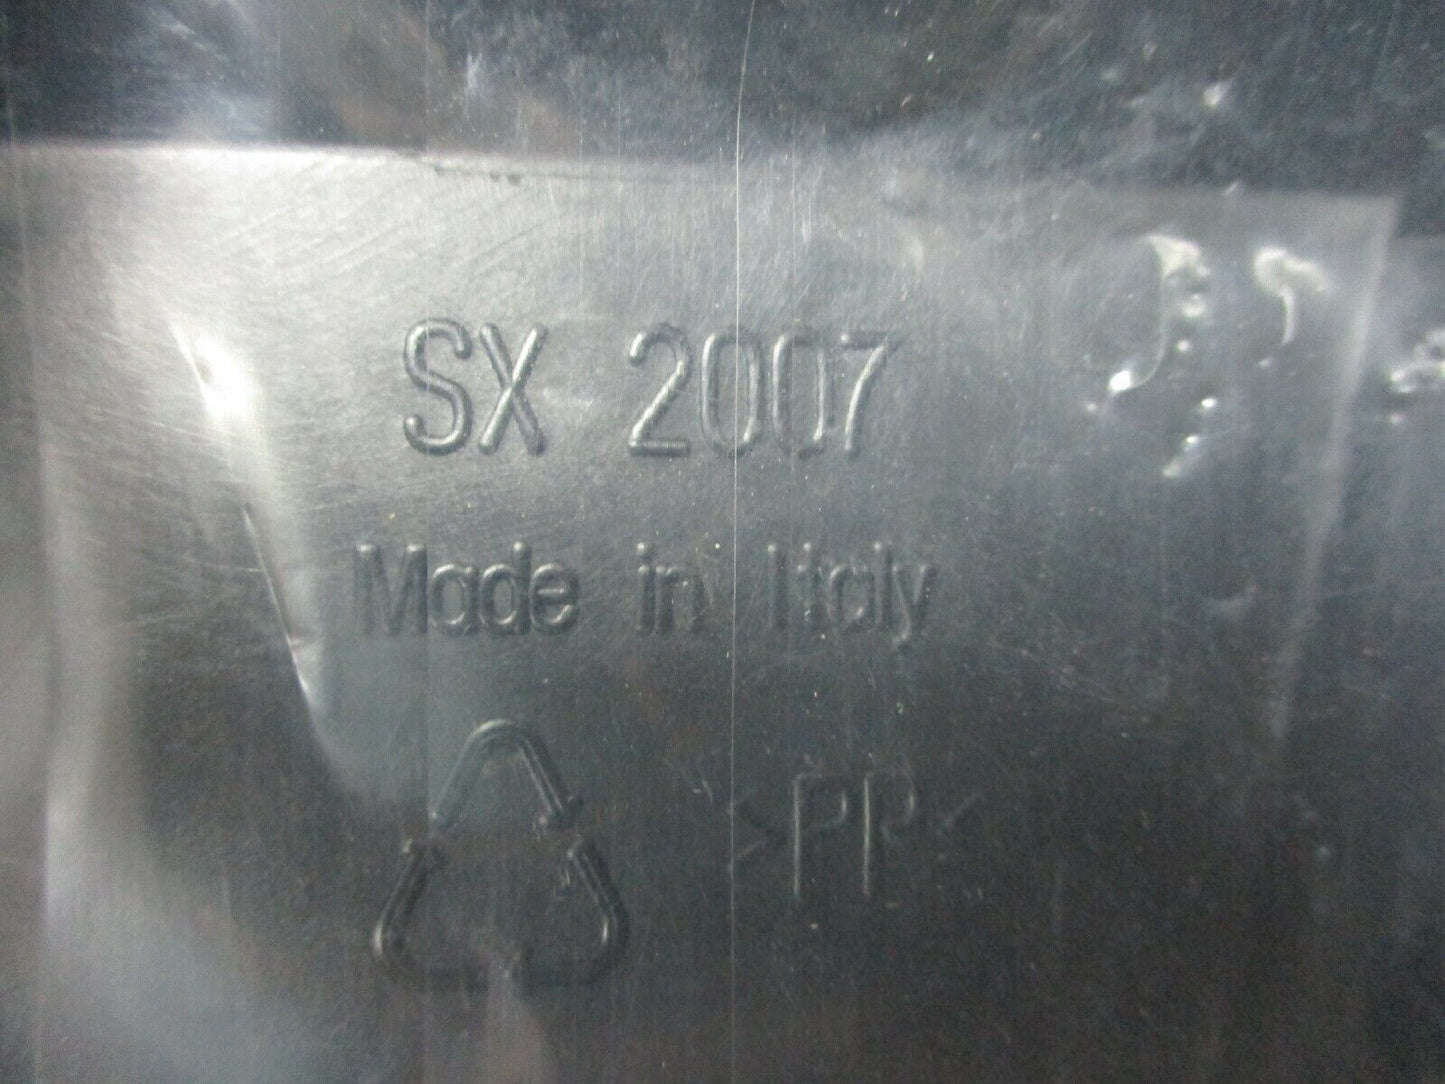 KTM SX:07-10 EXC XC XC-W:08-10 Black Front Fender By Acerbis 2082010001